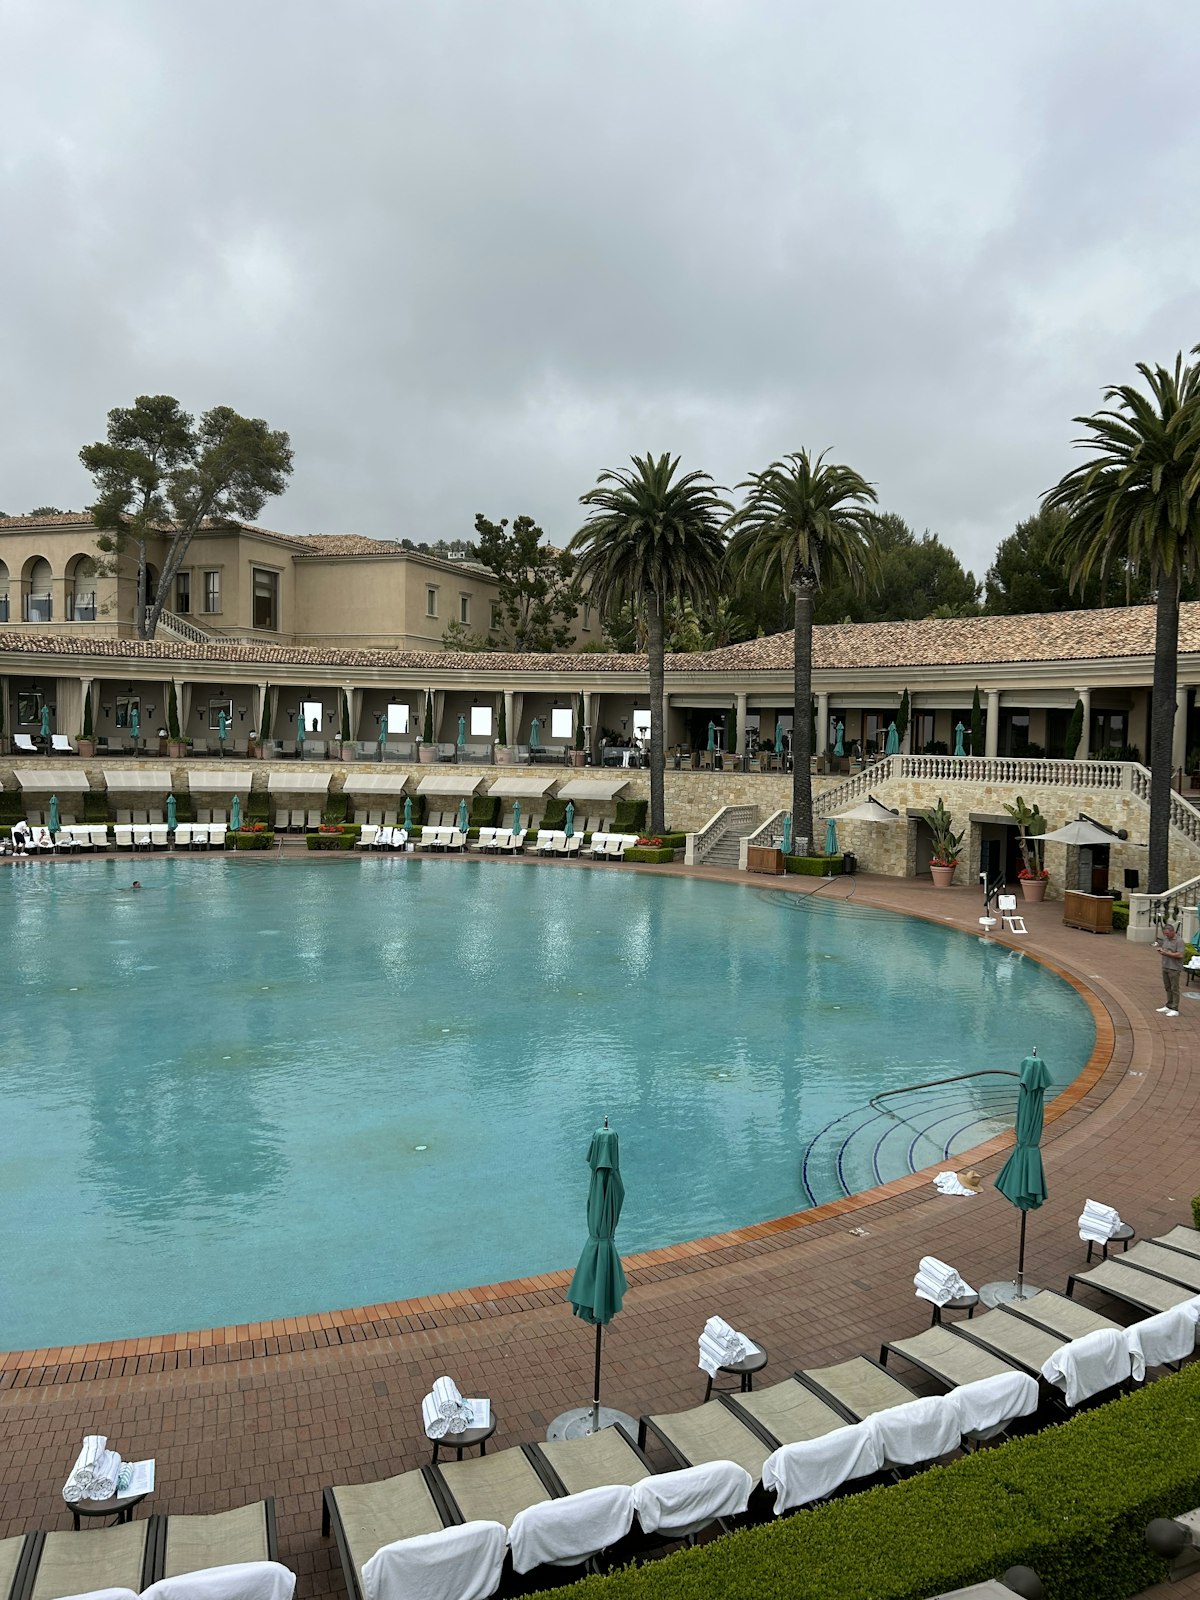 The pool at Pelican Hill Resort, Newport Beach